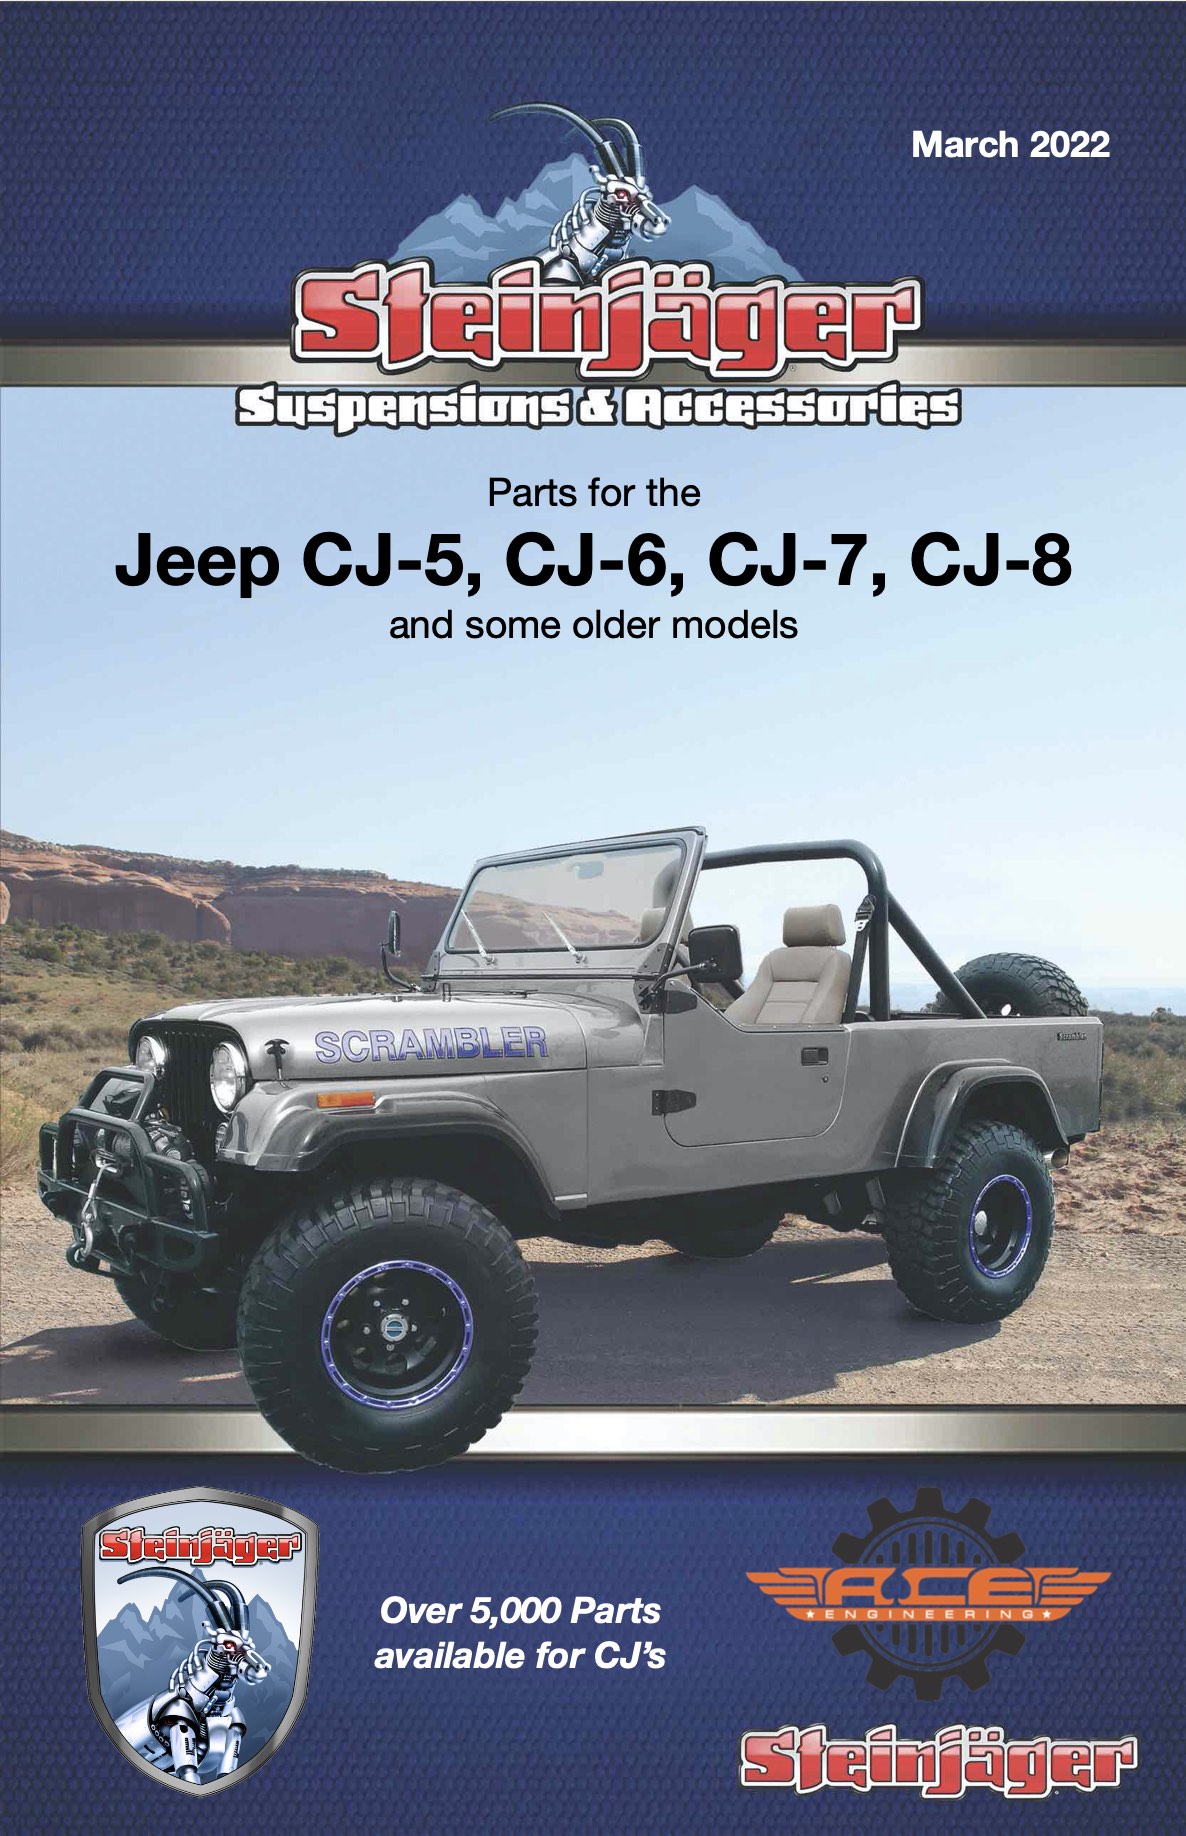 Catalog for Jeep CJ-5, CJ-6, CJ-7 and CJ-8